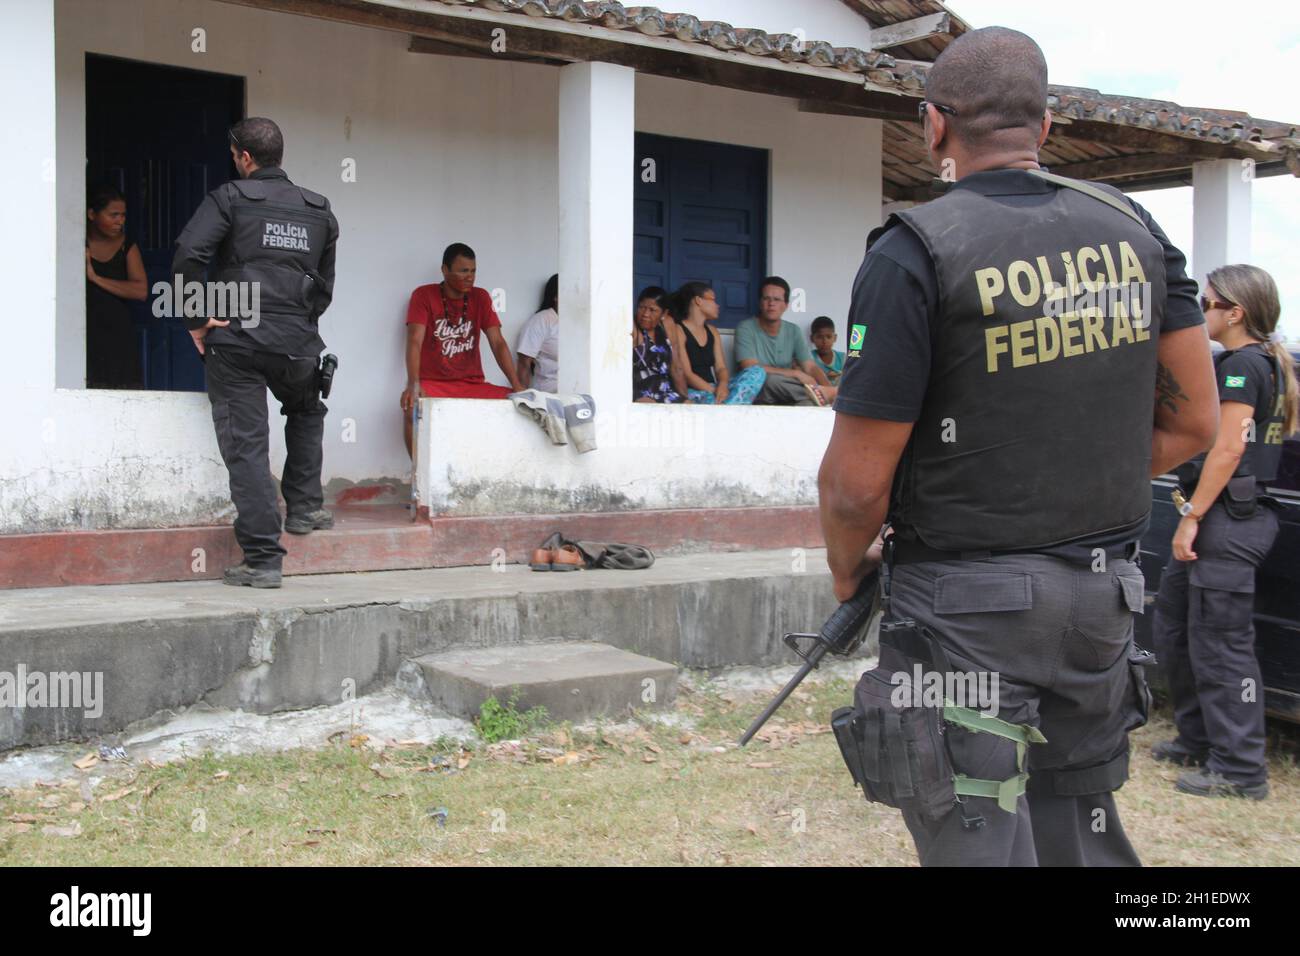 pau brasil, bahia / Brazil - april 21, 2012: Federal Police officers accompany a farm invaded by Pataxo Hahahae Indians in rural Pau Brazil. *** Local Stock Photo